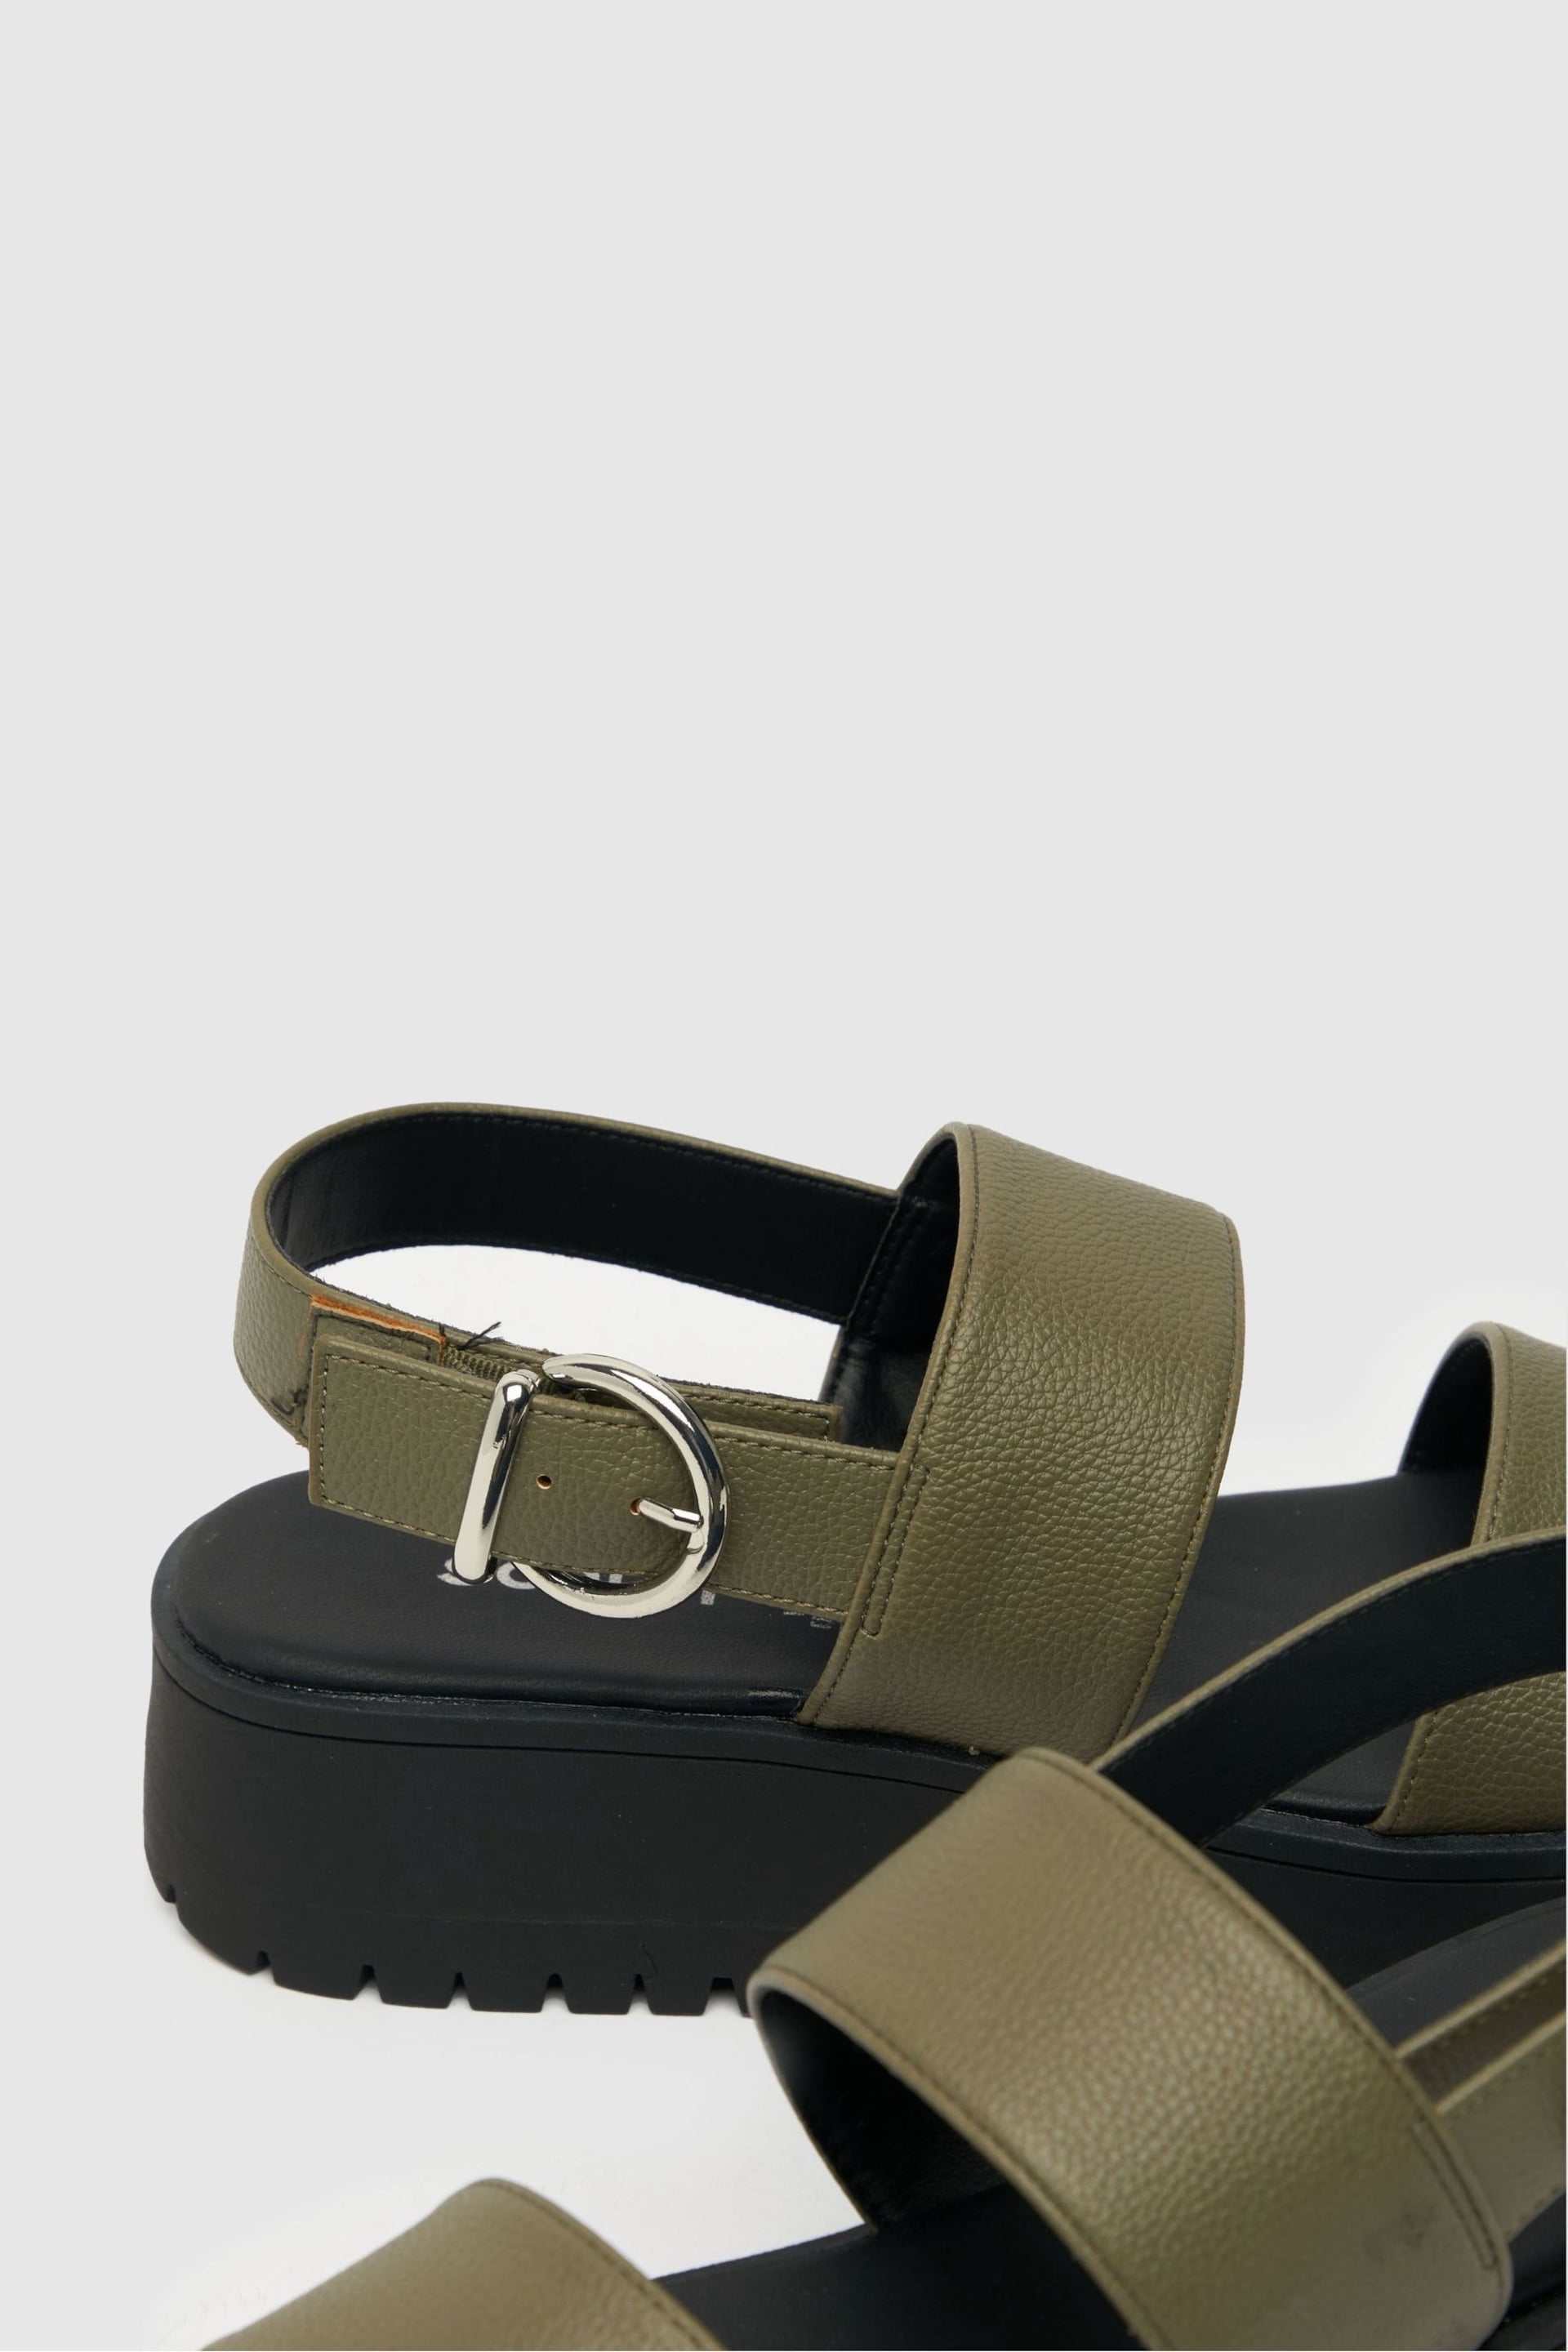 Schuh Tanya Chunky Flatform Sandals - Image 4 of 4